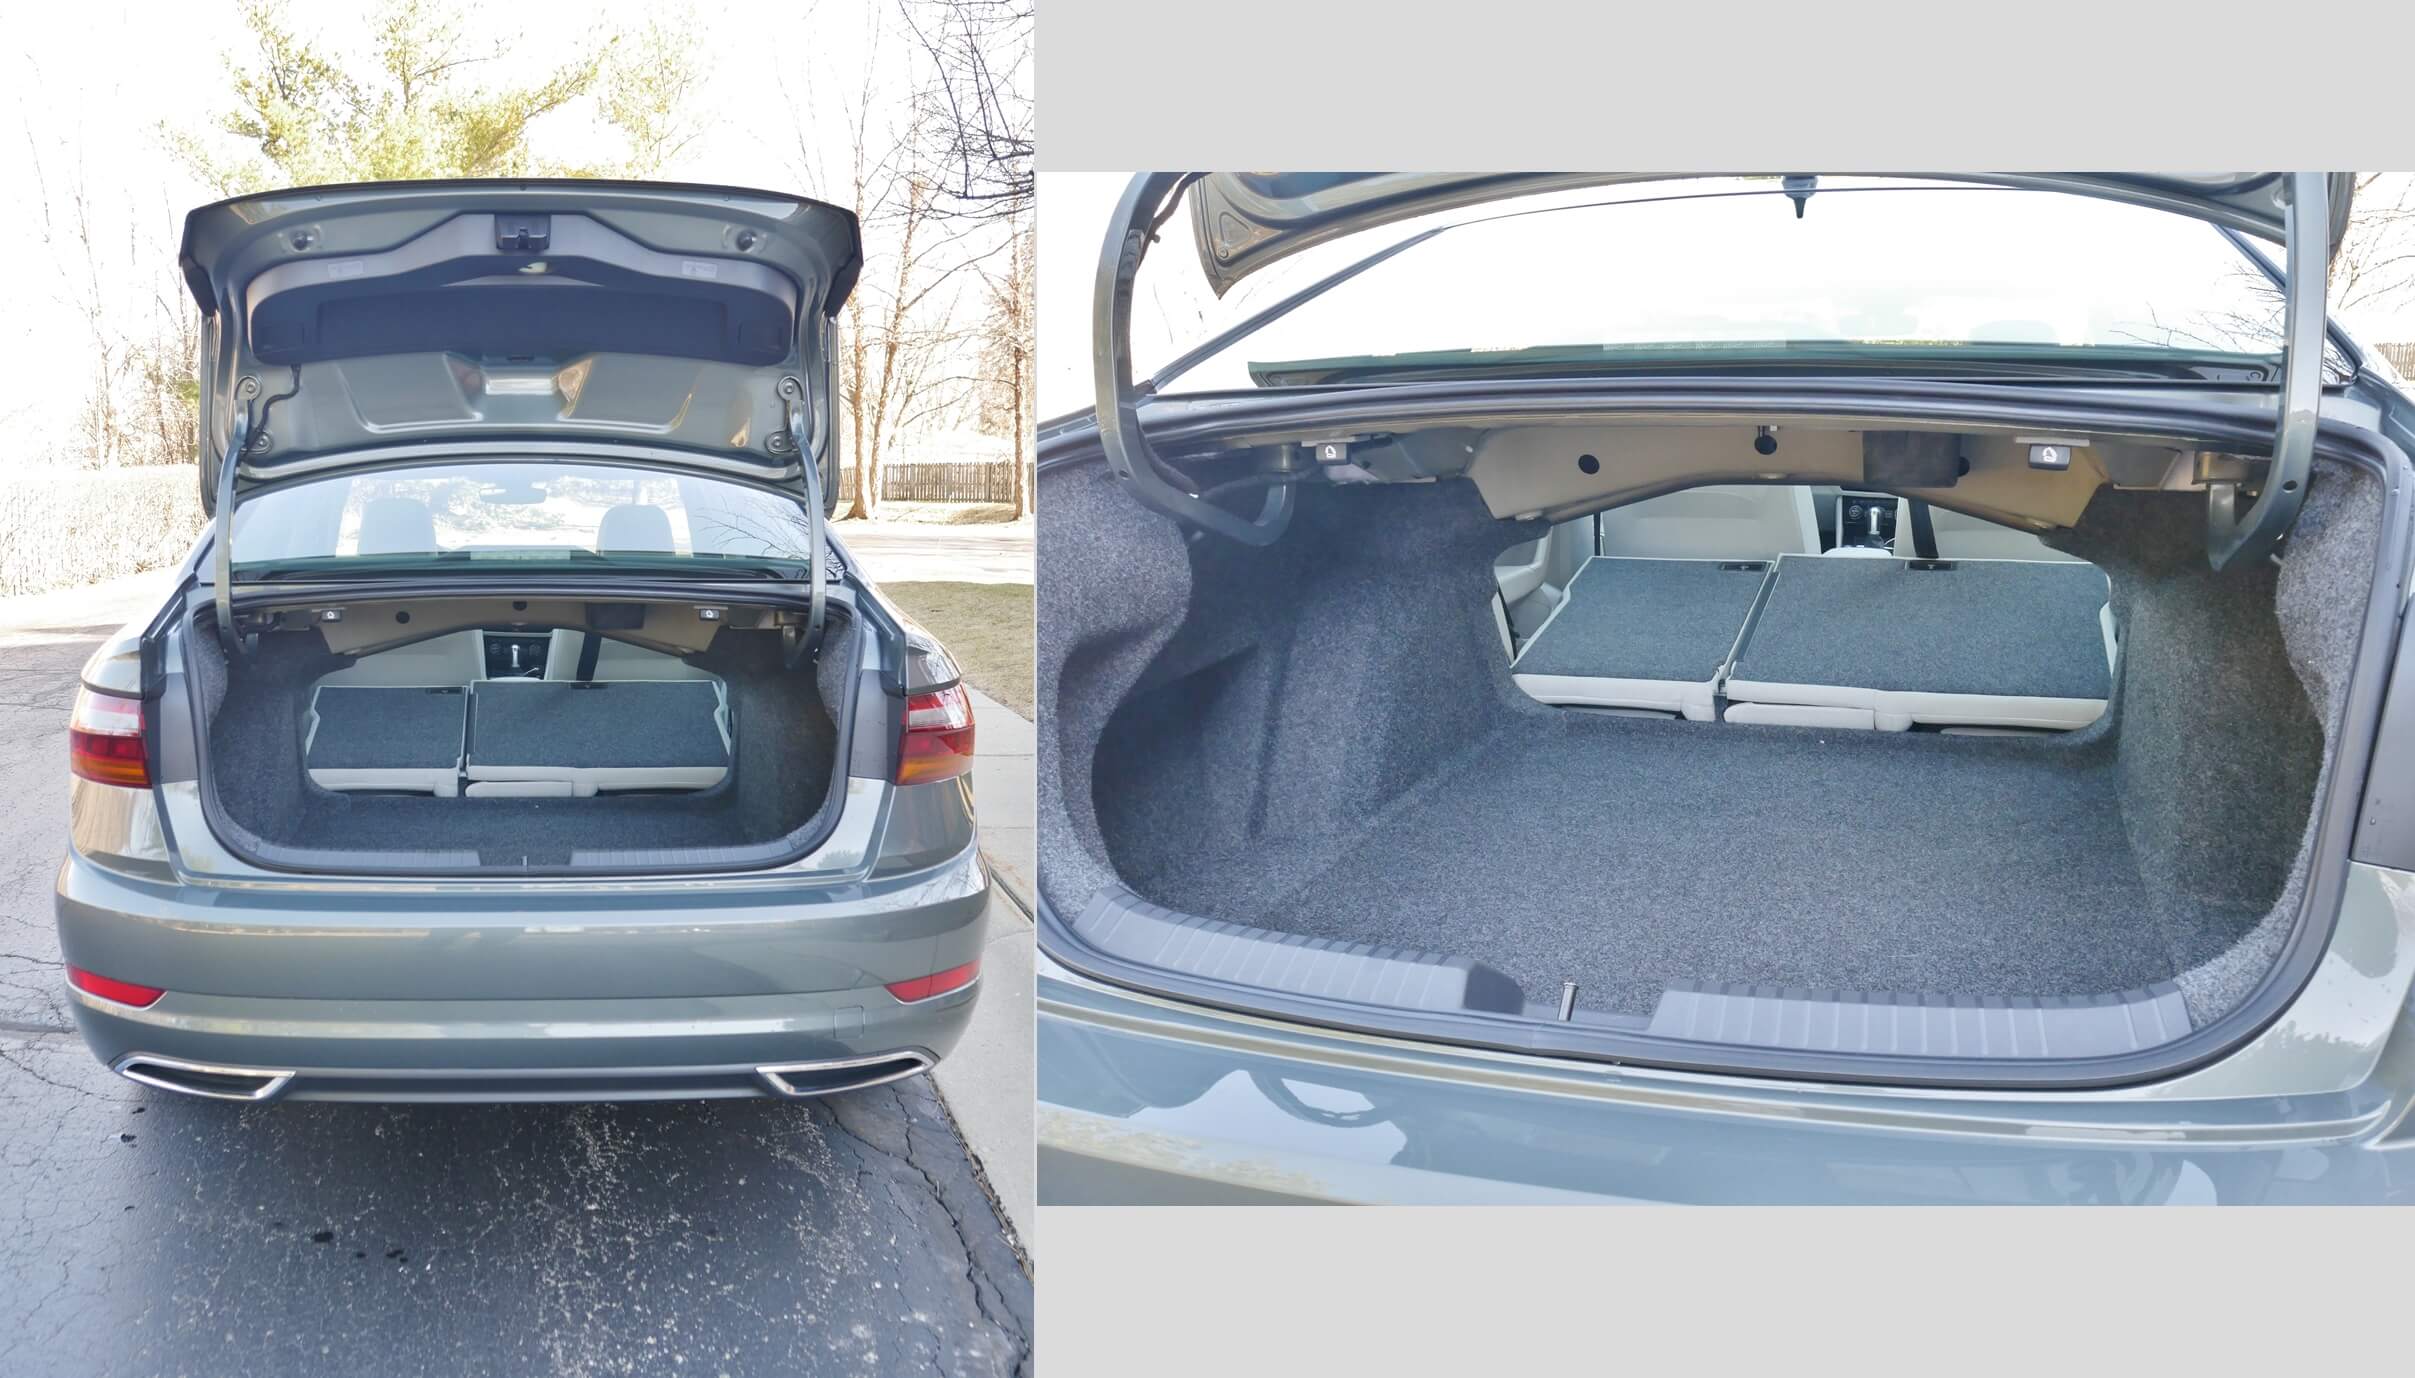 2019 Volkswagen Jetta SEL Premium: Std. 60/40% split 2nd Row seat back improves on what is already a mid-size sedan trunk